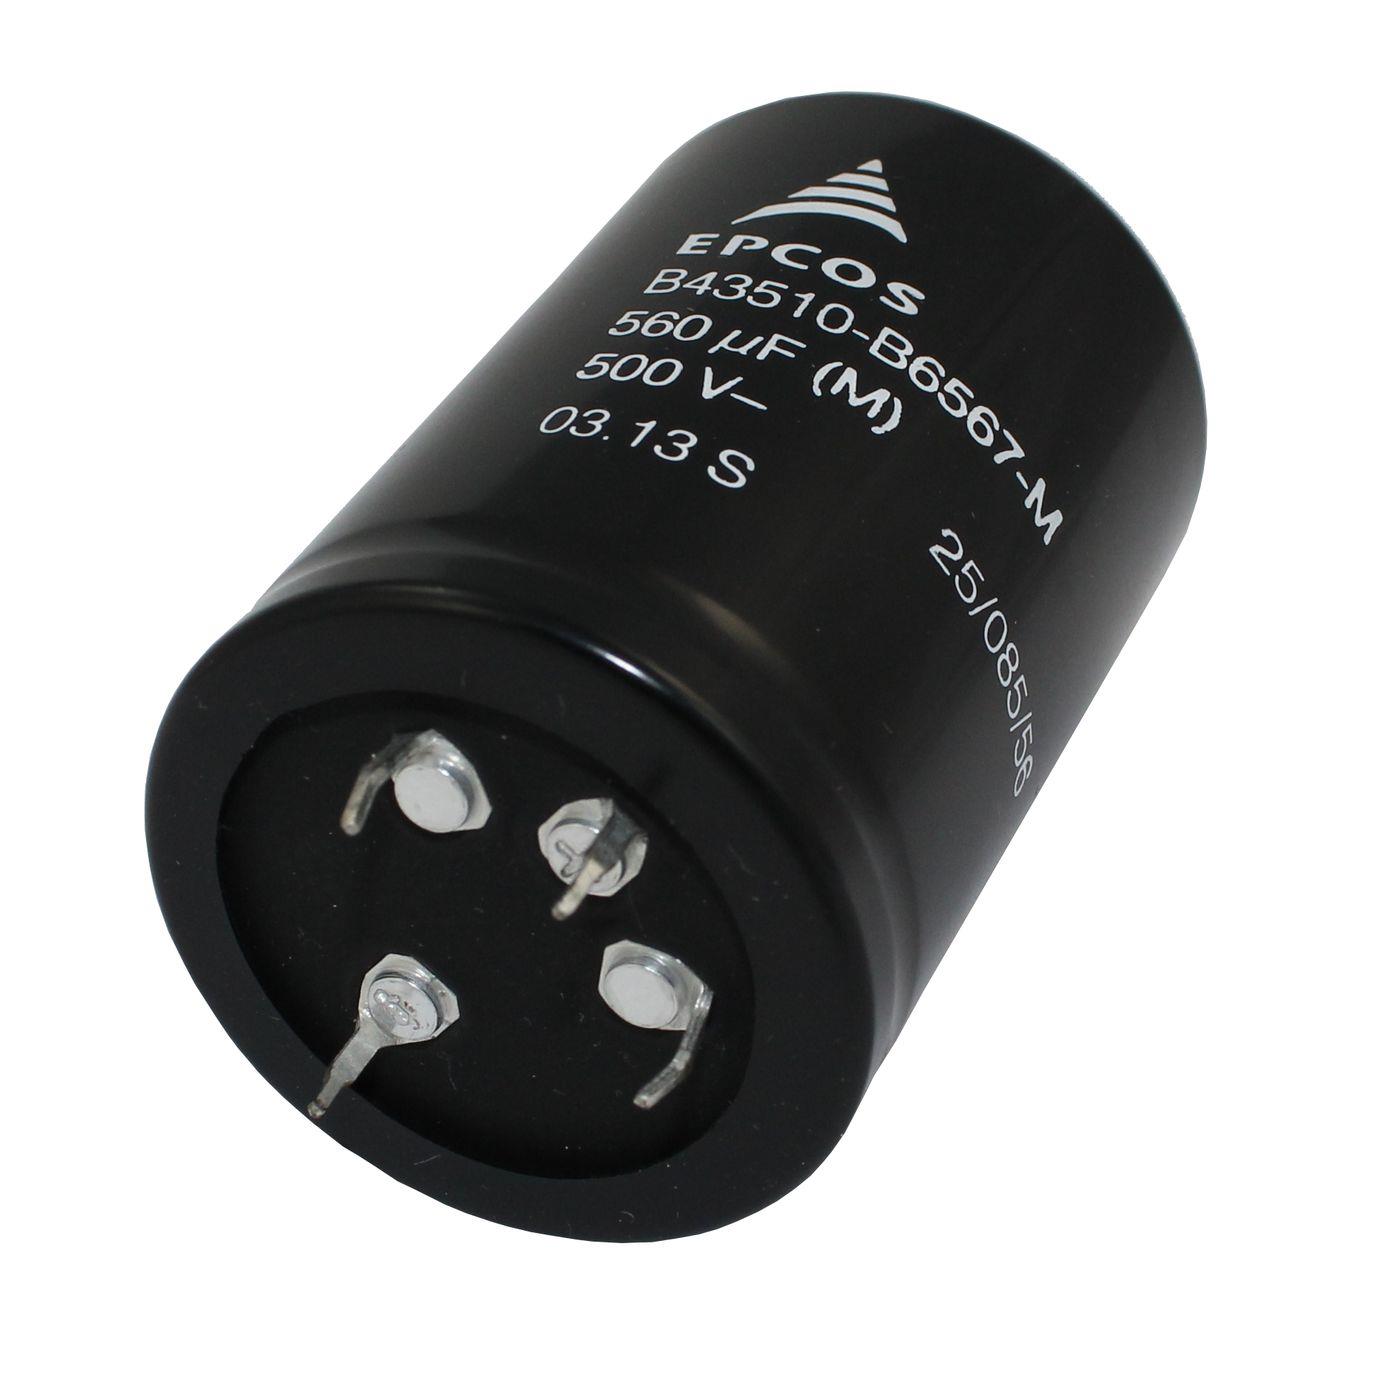 4-Pin Elko Kondensator Radial 560µF 500V 85°C B43510B6567MS1 d40x60mm 560uF